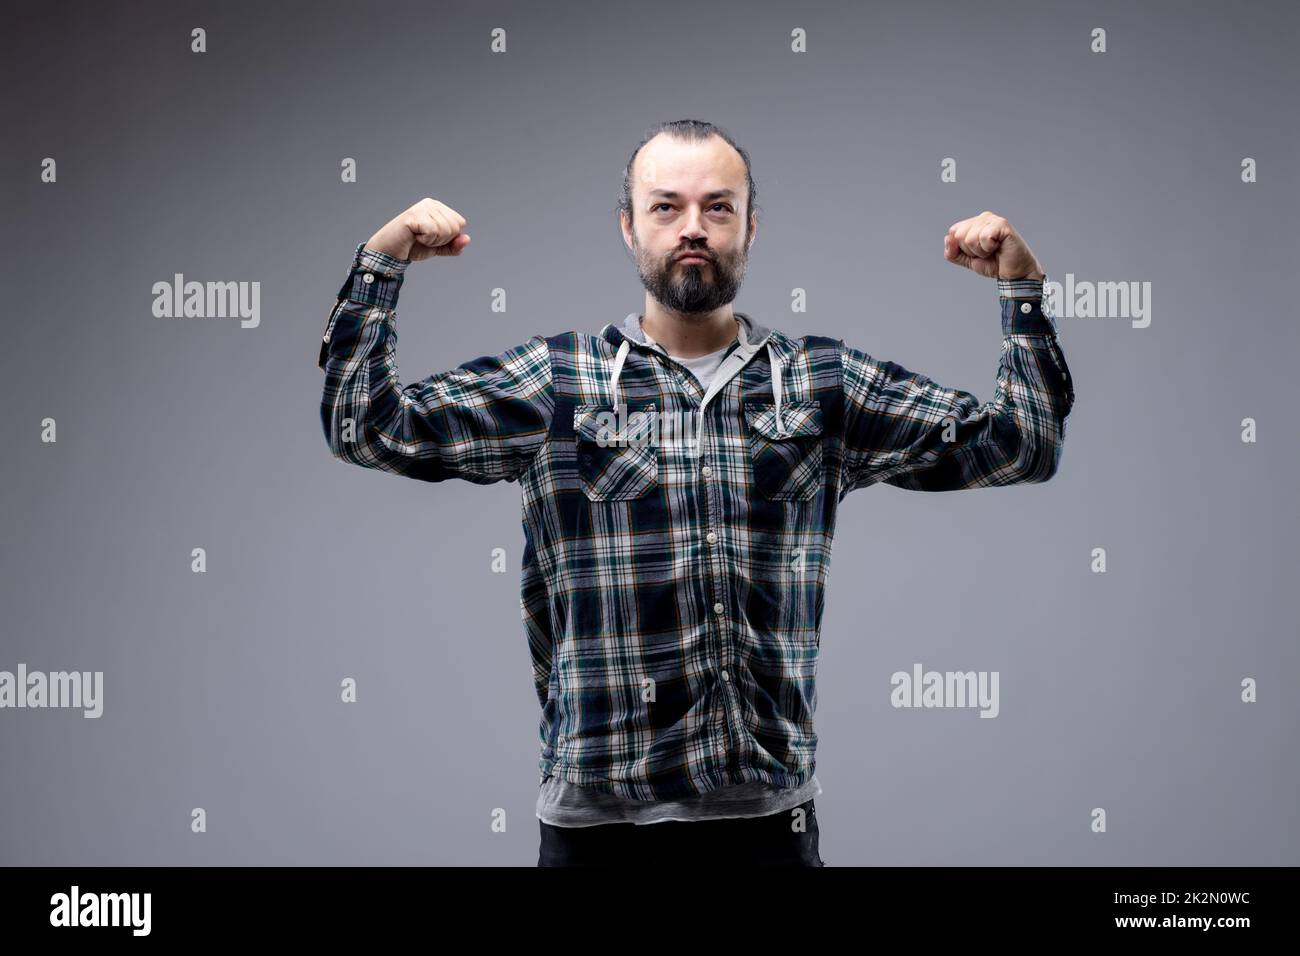 Macho bearded man flexing his arms Stock Photo